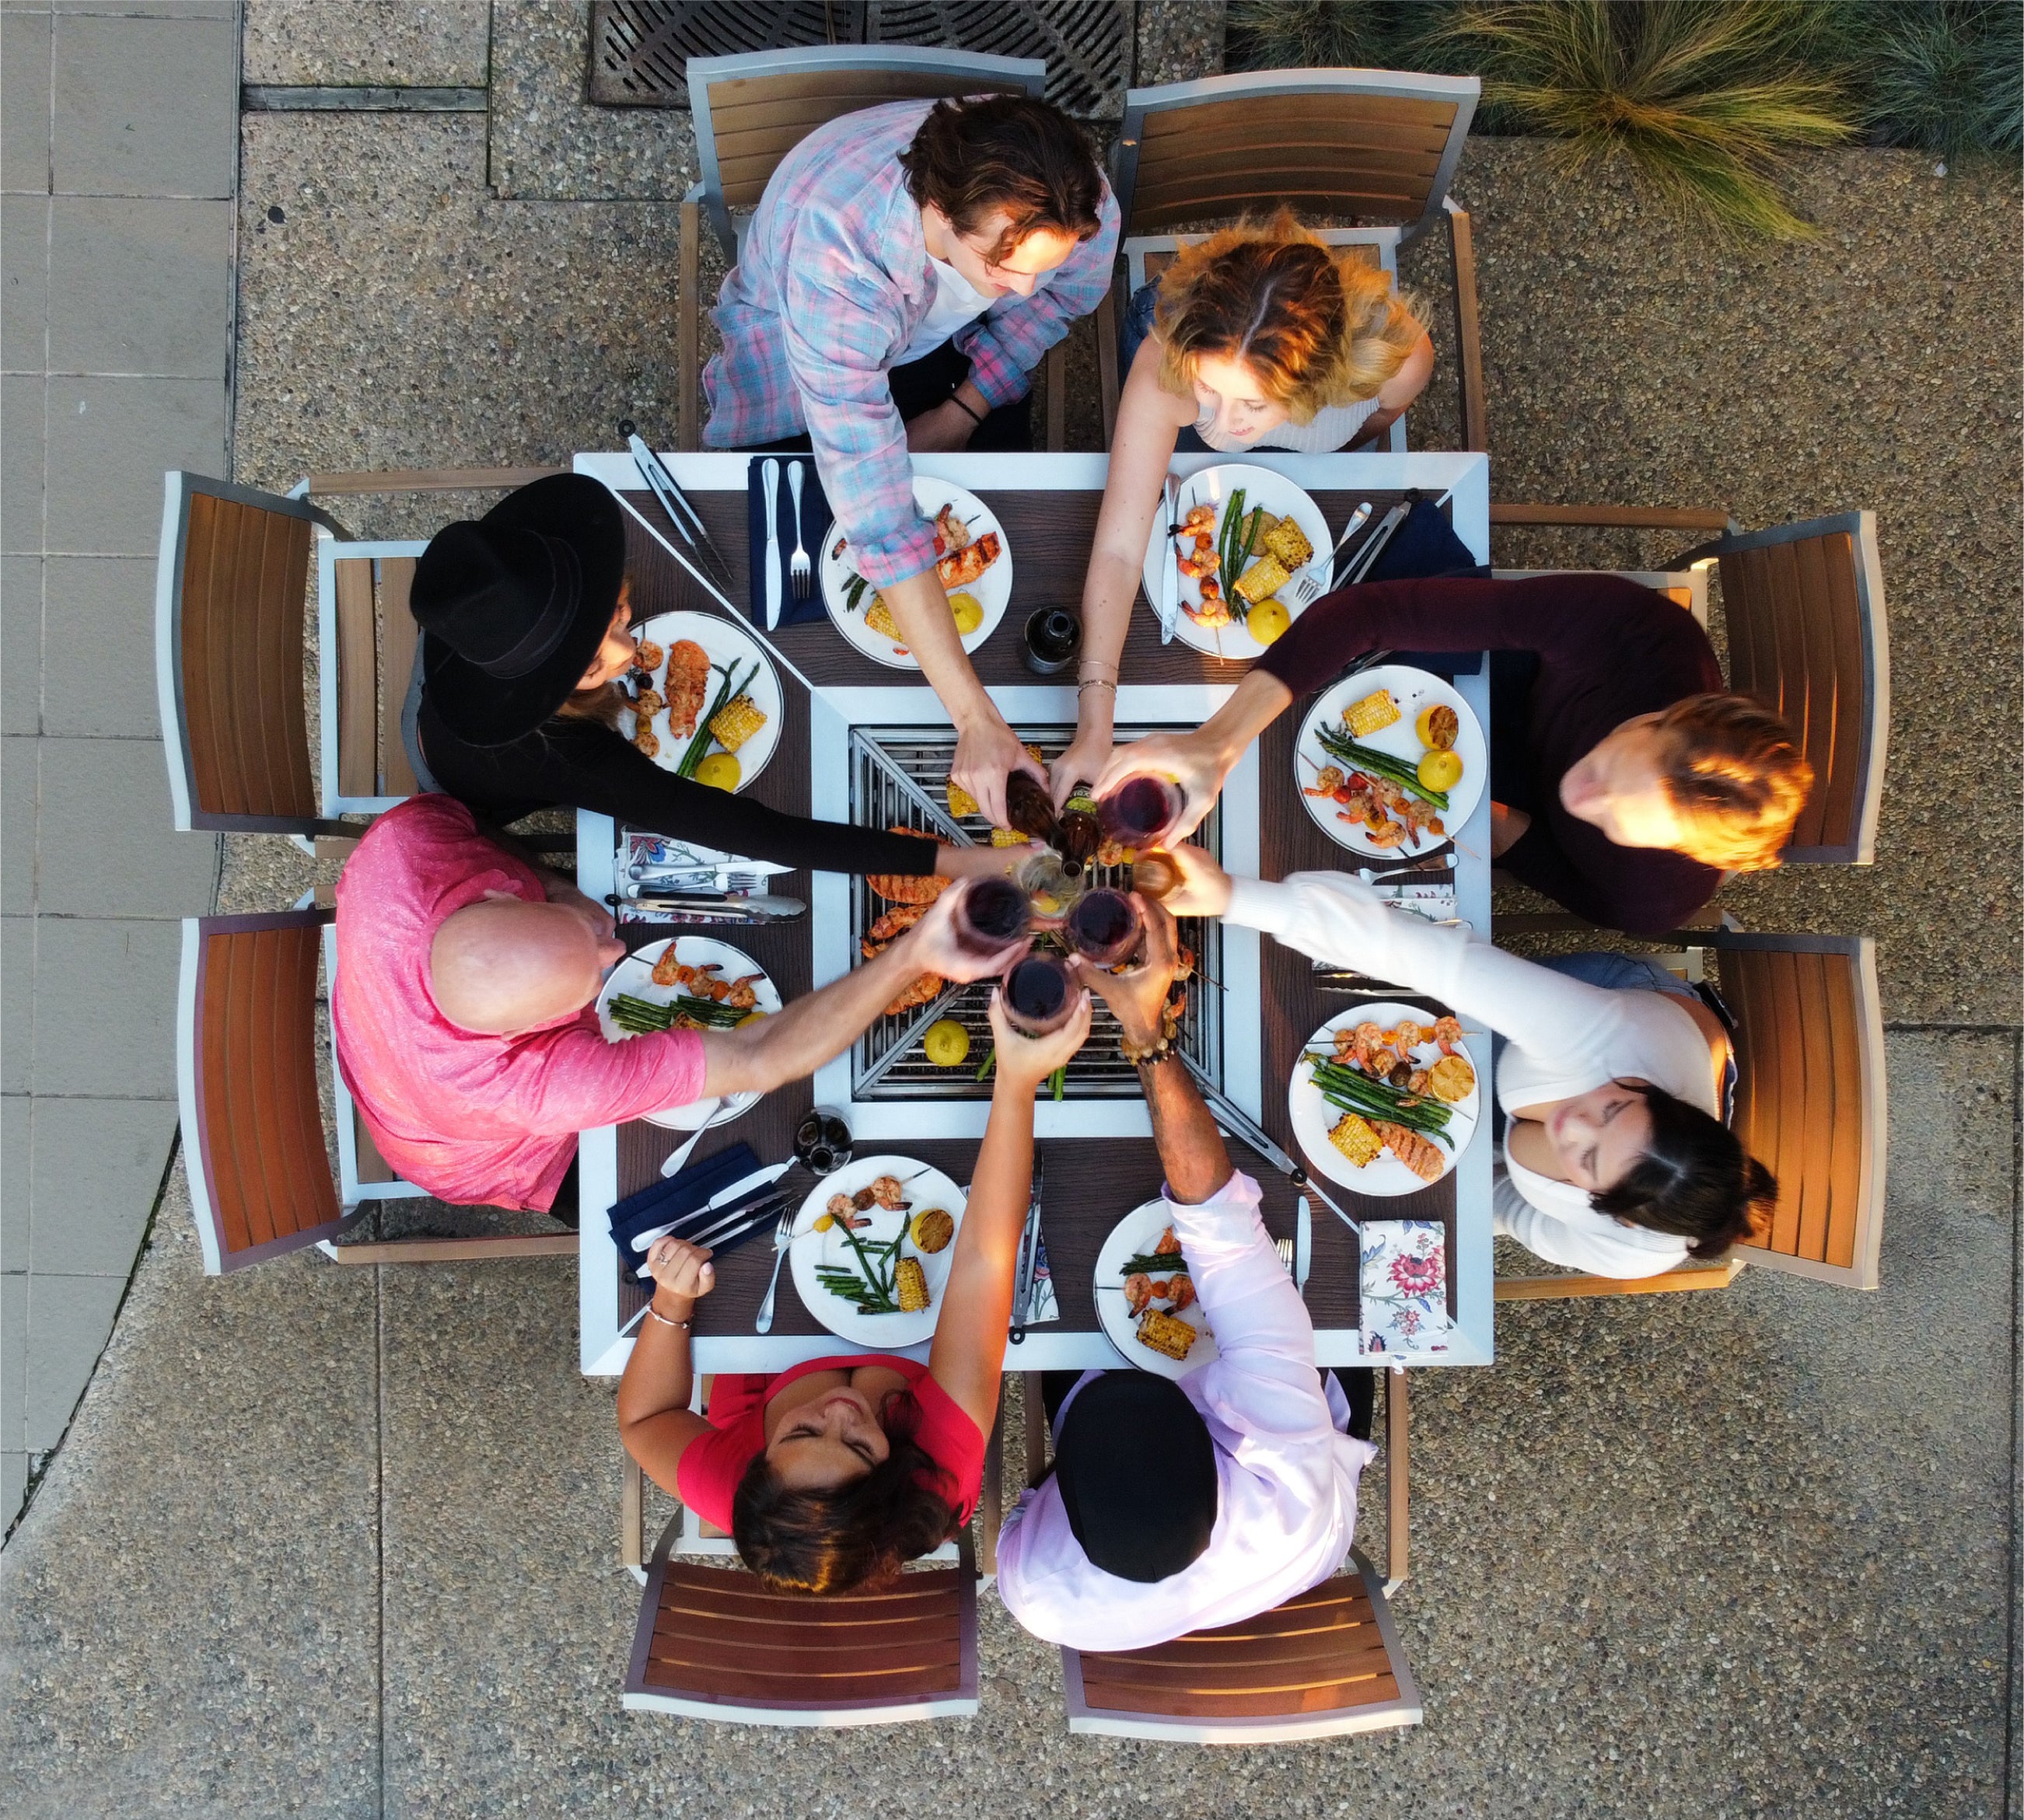 8 people eating around the angara quadra grilling table